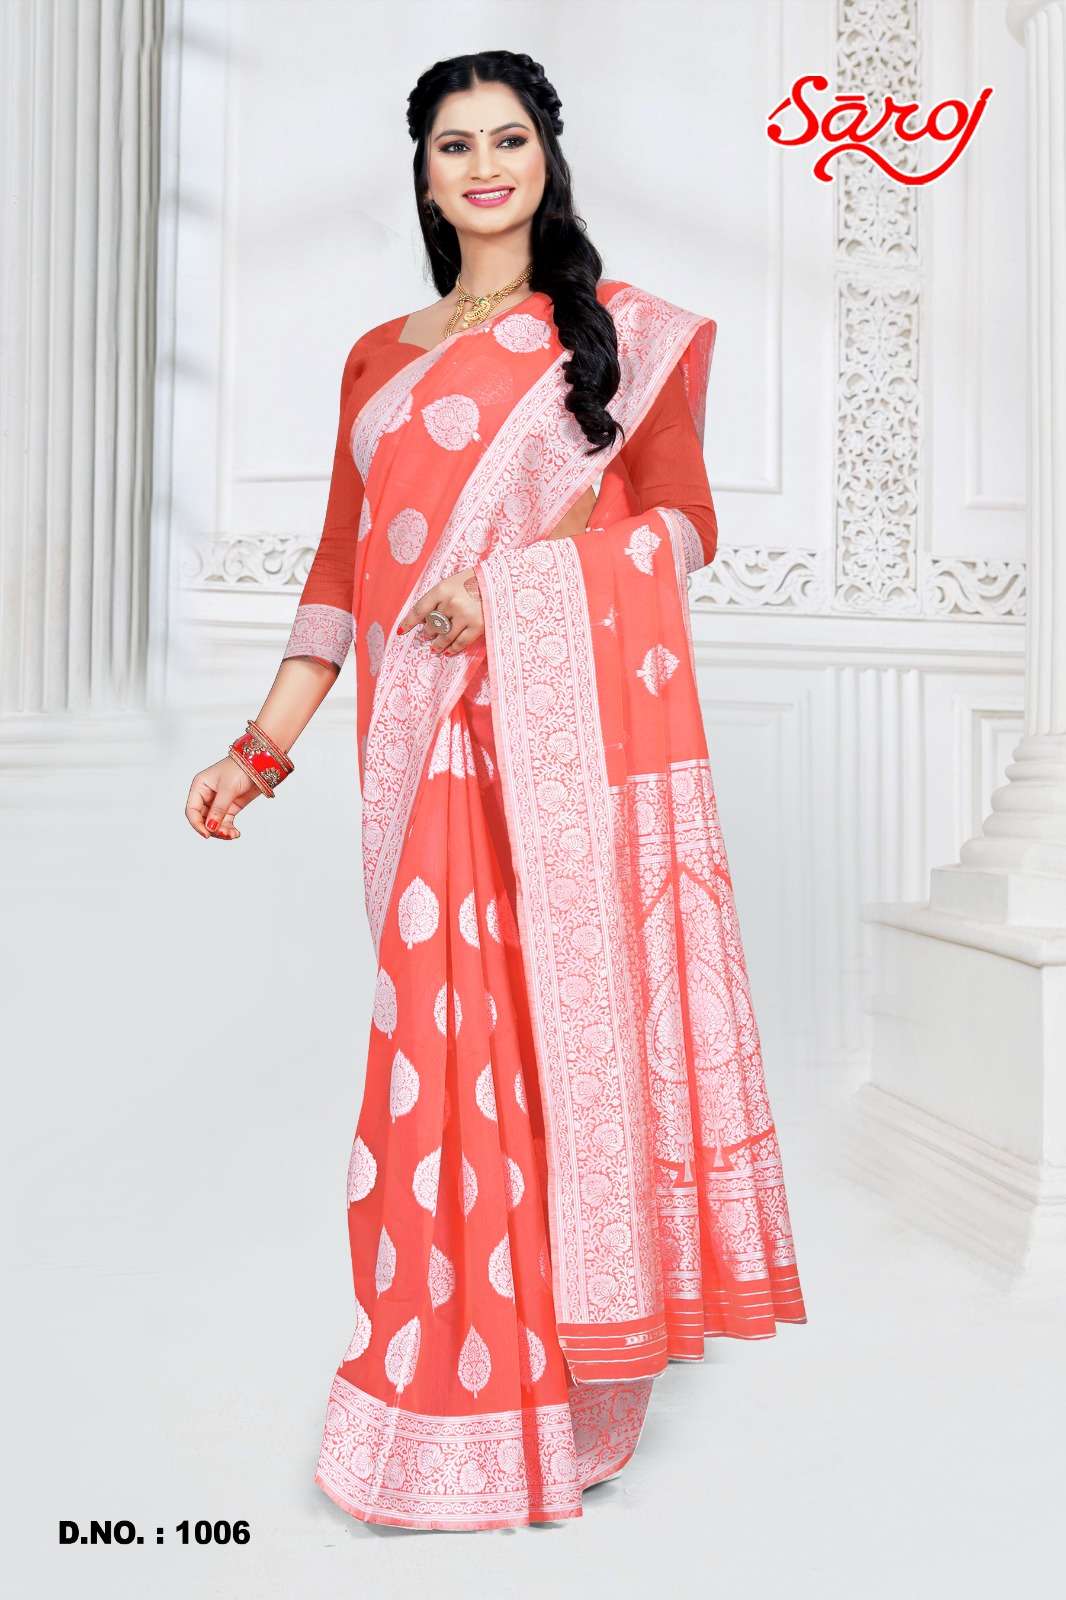 Saroj textile presents Madhuvanti vol-2 Cotton Designer sarees catalogue